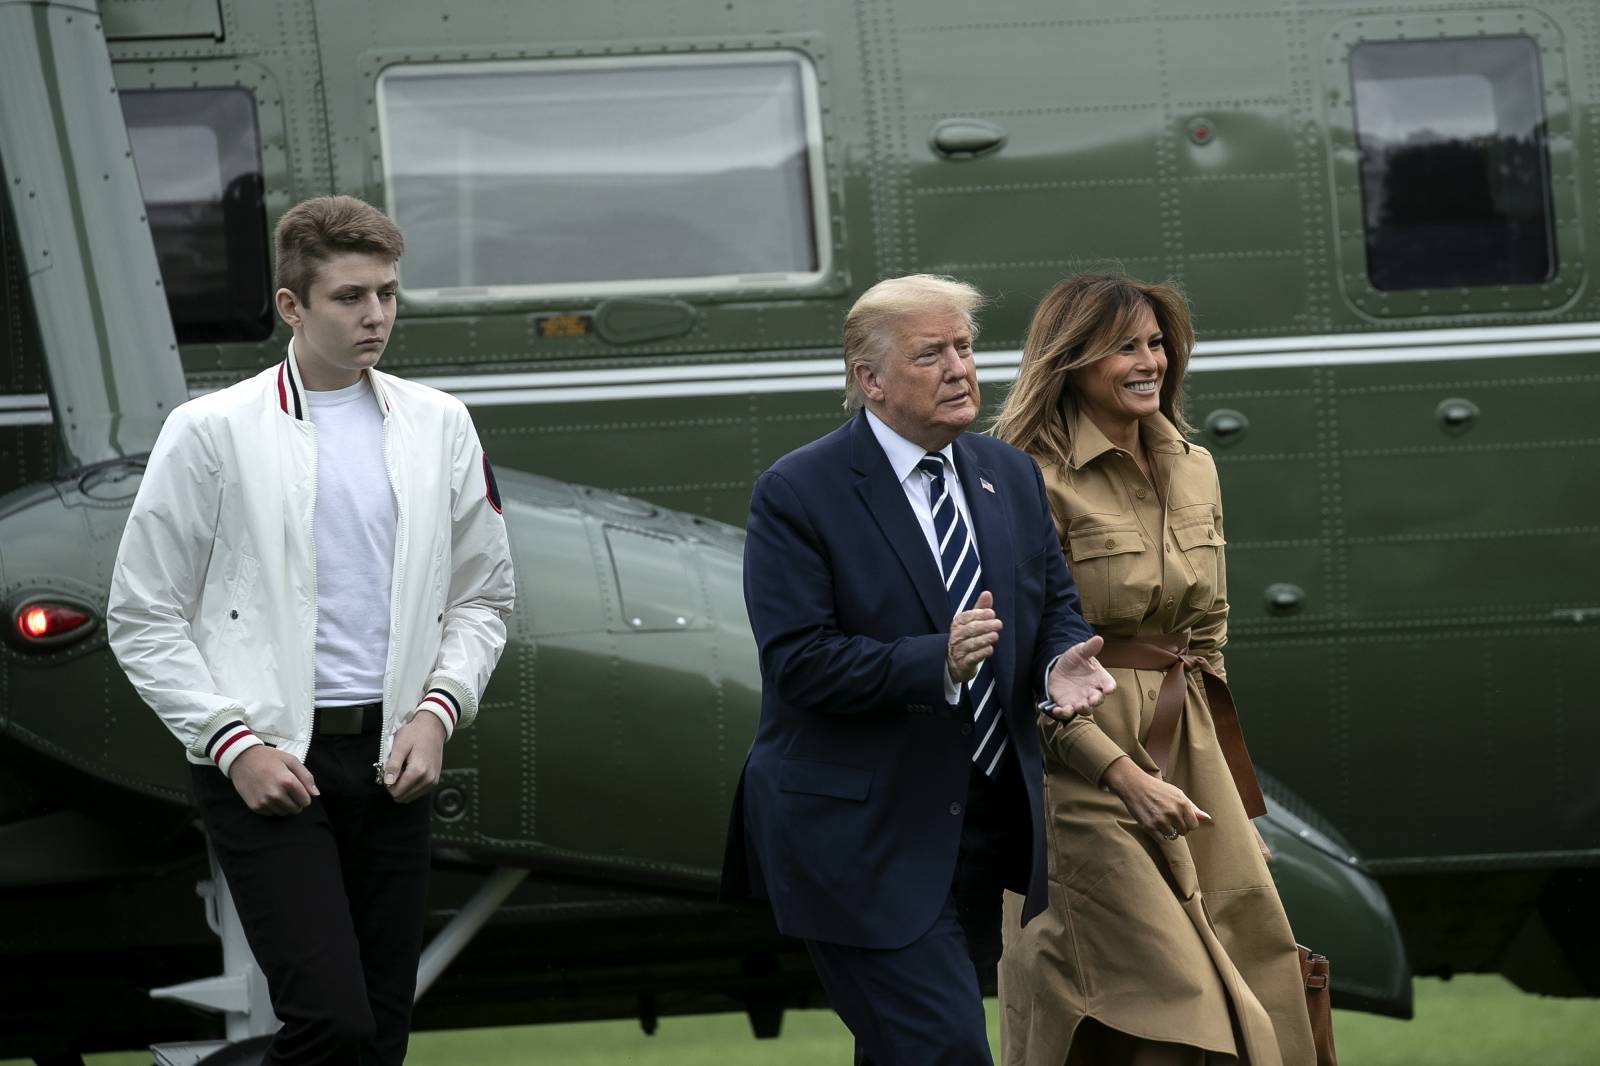 Trumps Return from Bedminster, NJ